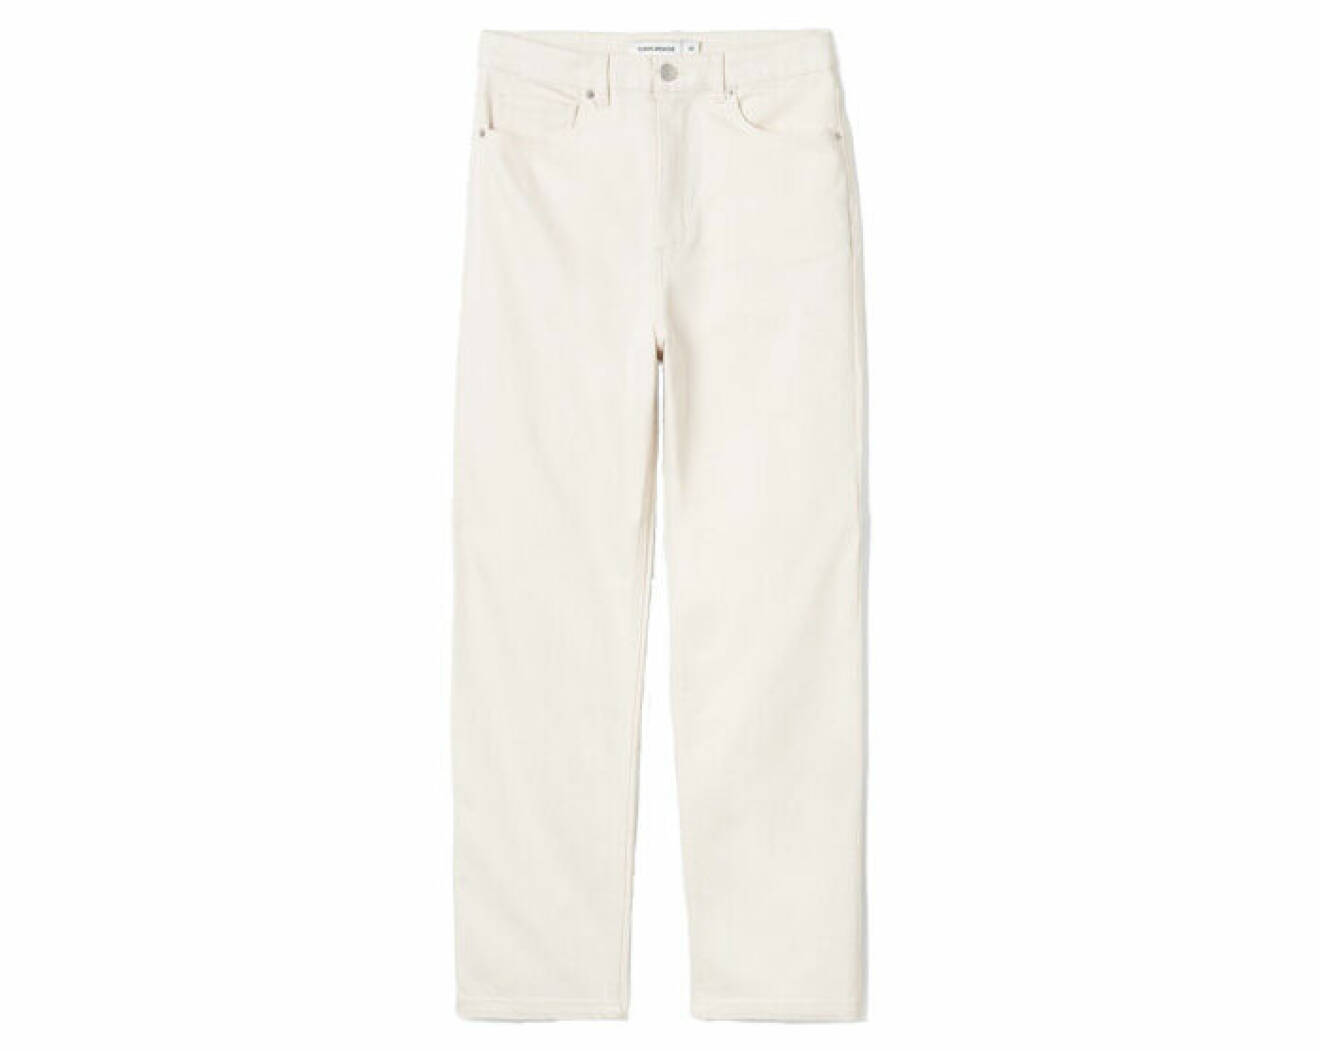 jeans smal passform och croppade byxben i vit nyans från CW by Carin Wester